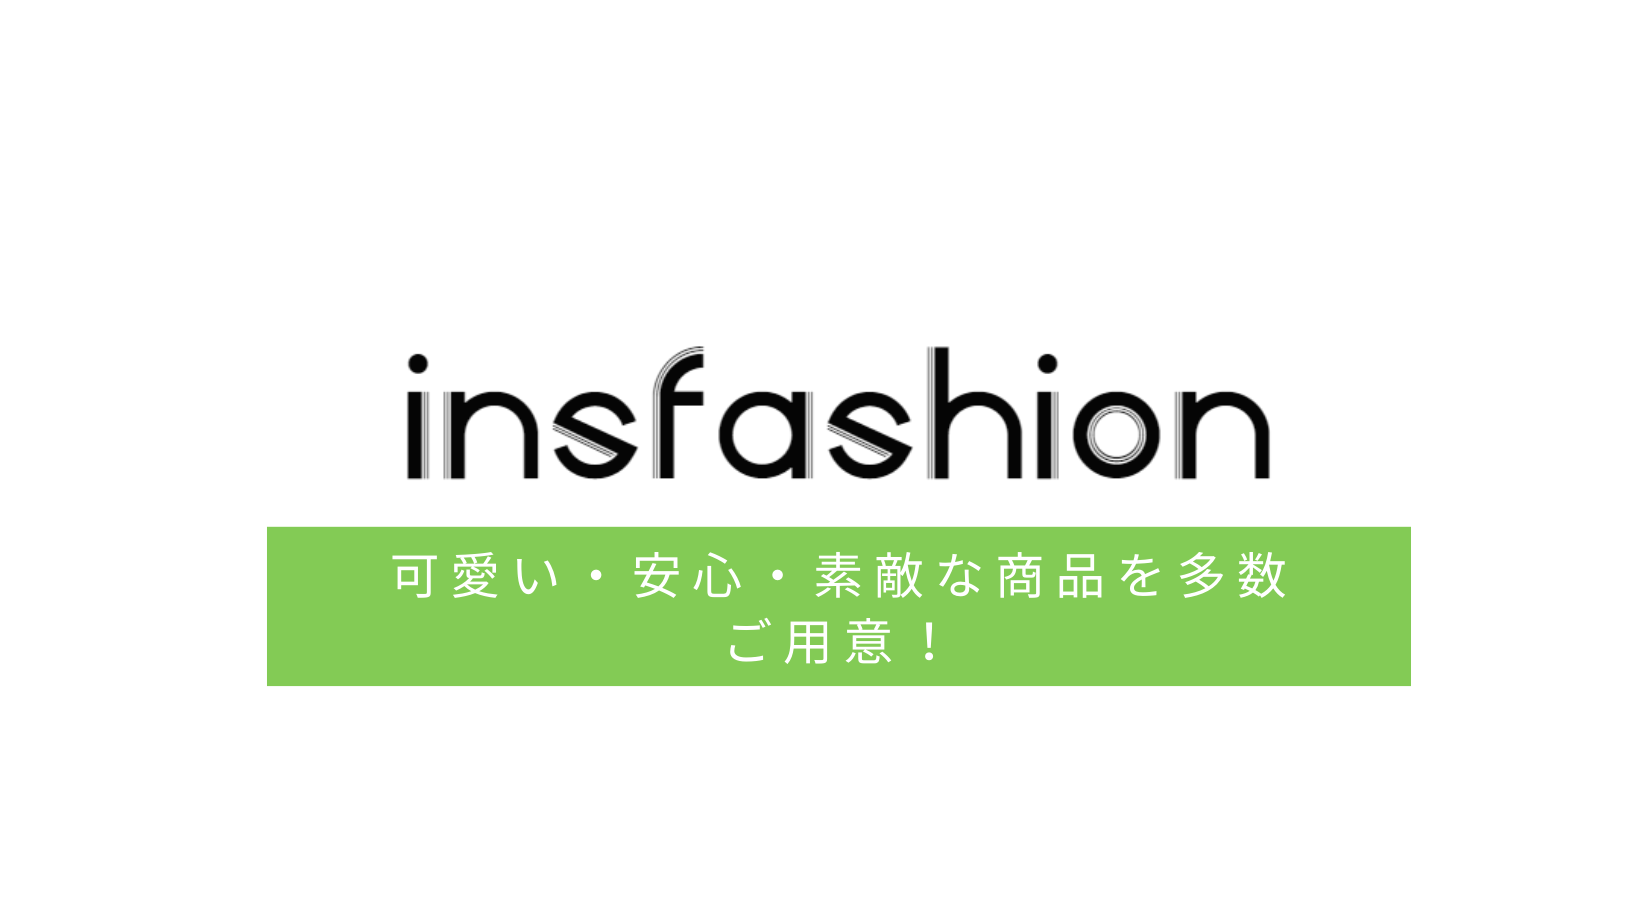 Ins fashion　ファッション専門店　可愛い・安心・素敵な商品を多数ご用意！